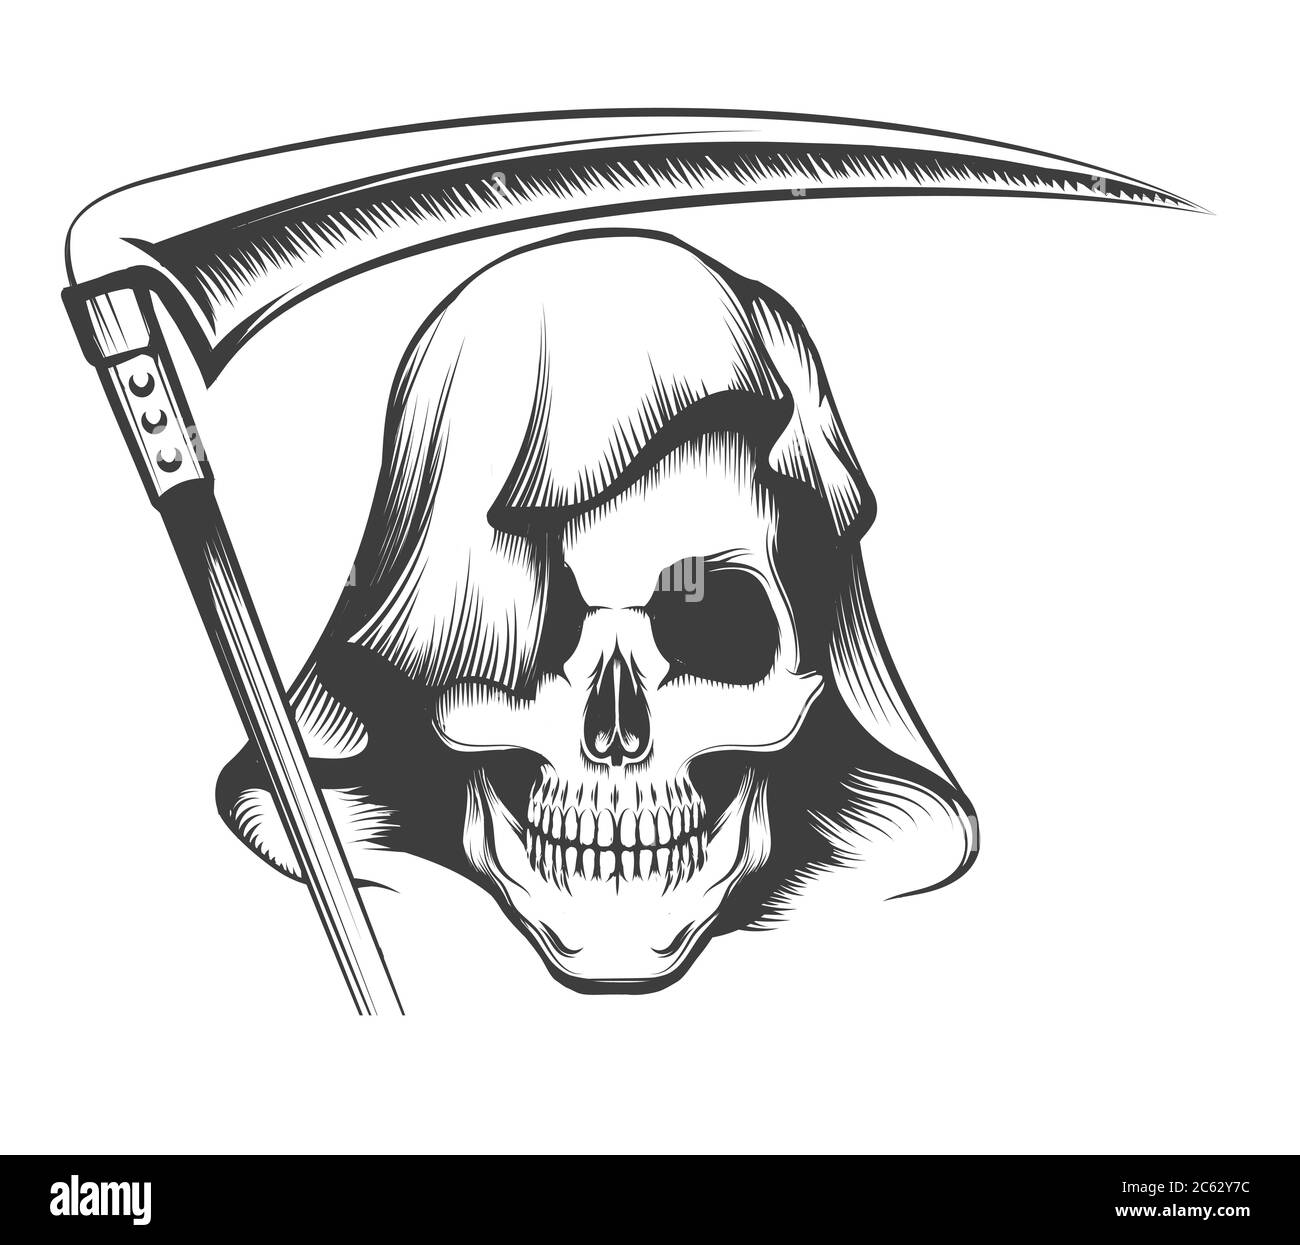 30 Meaningful Grim Reaper Tattoo Designs | Art and Design